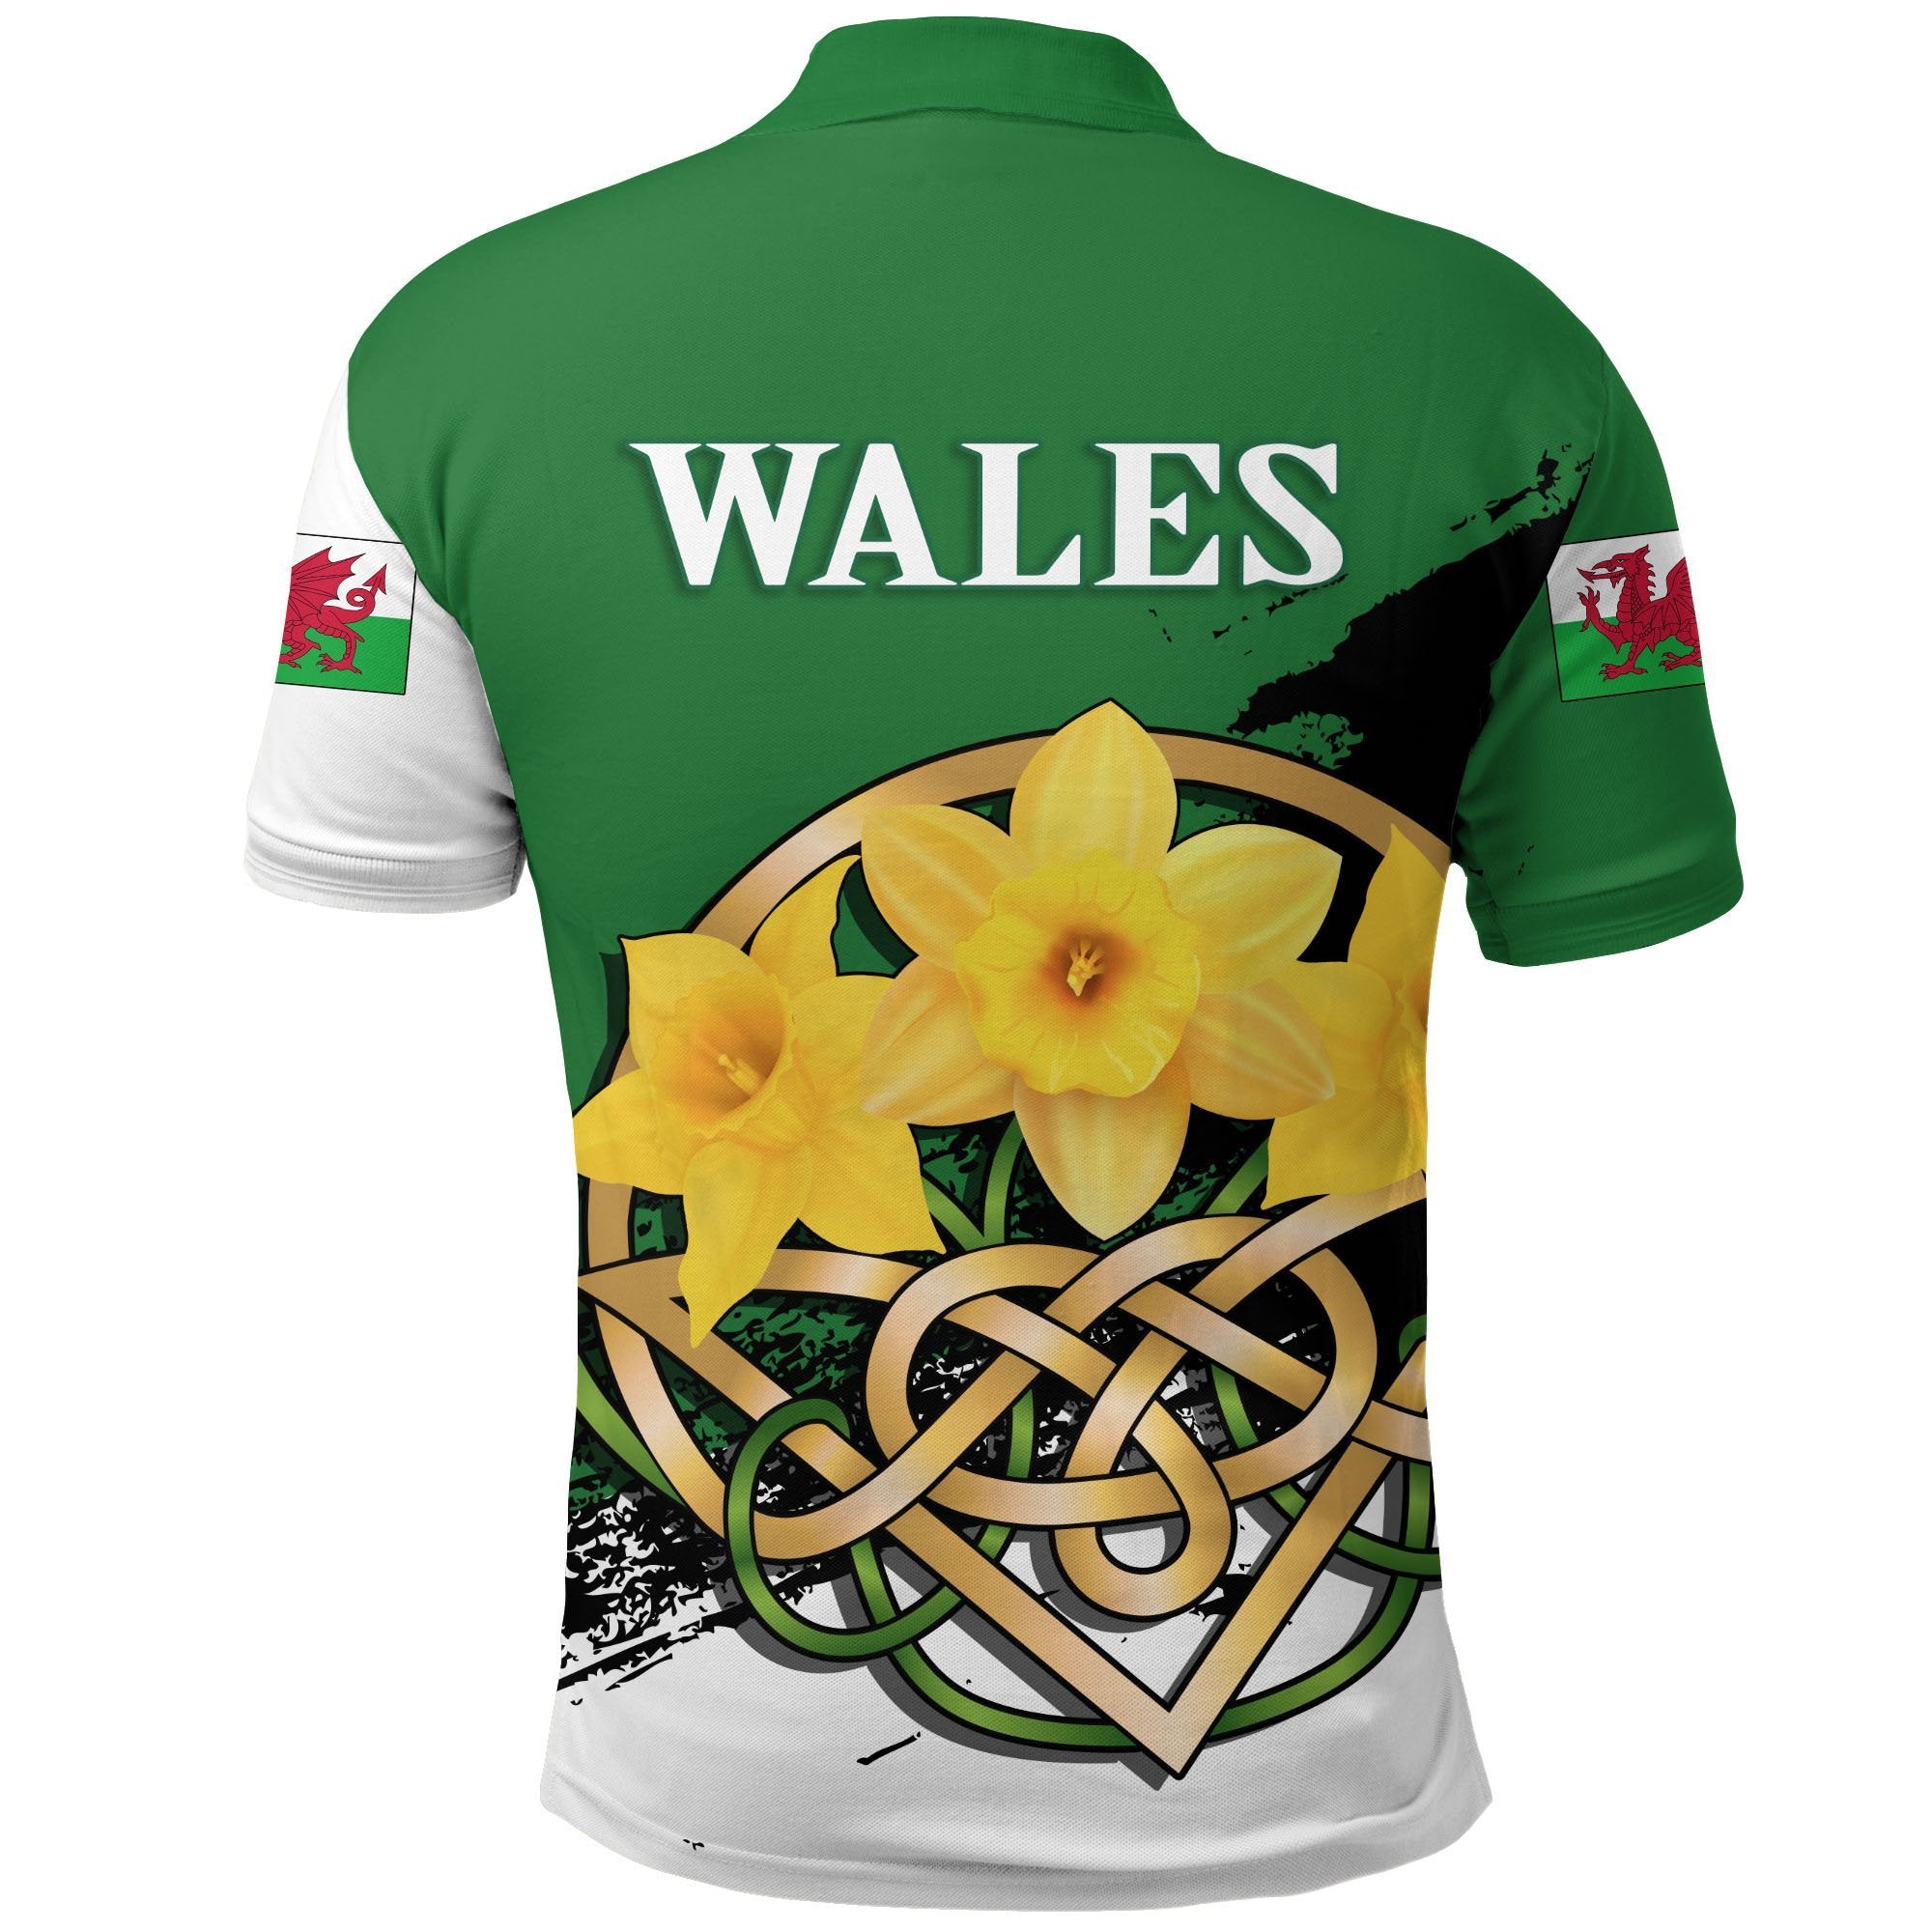 wales-polo-shirt-daffodil-celtic-knot